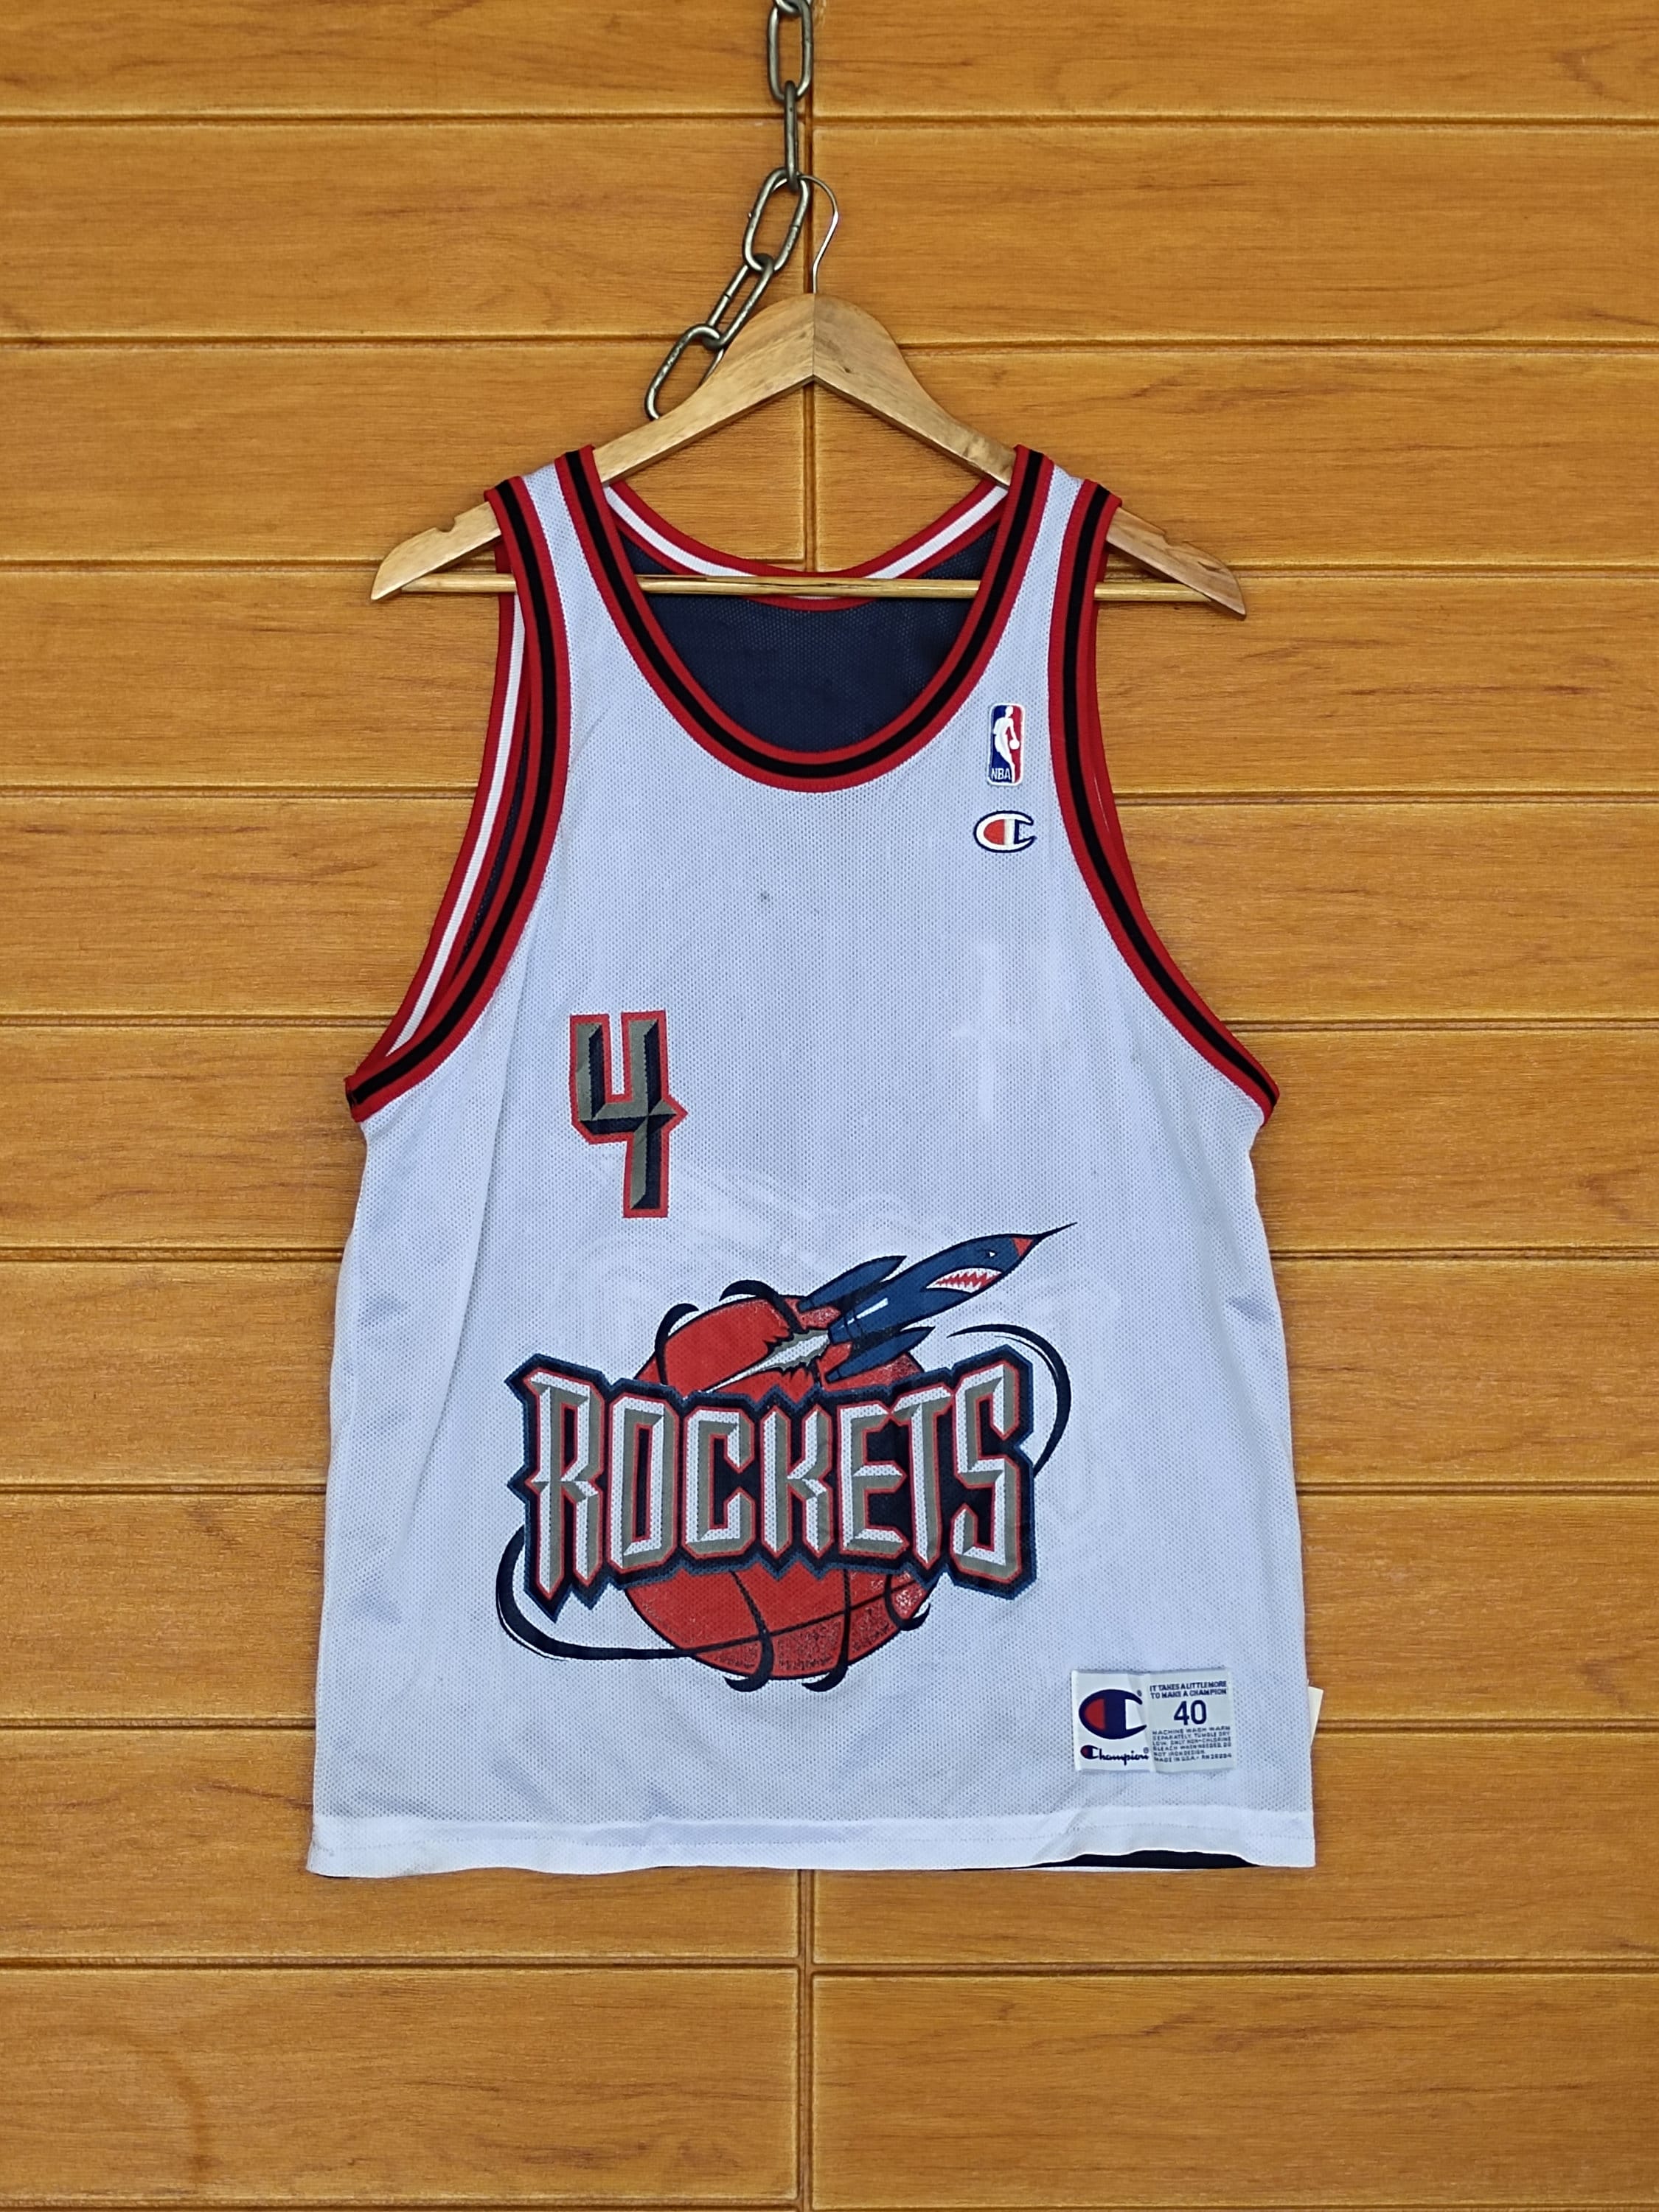 Vintage 90s Charles Barkley Houston Rockets Jersey Boys XL Champion NBA  Blue #4